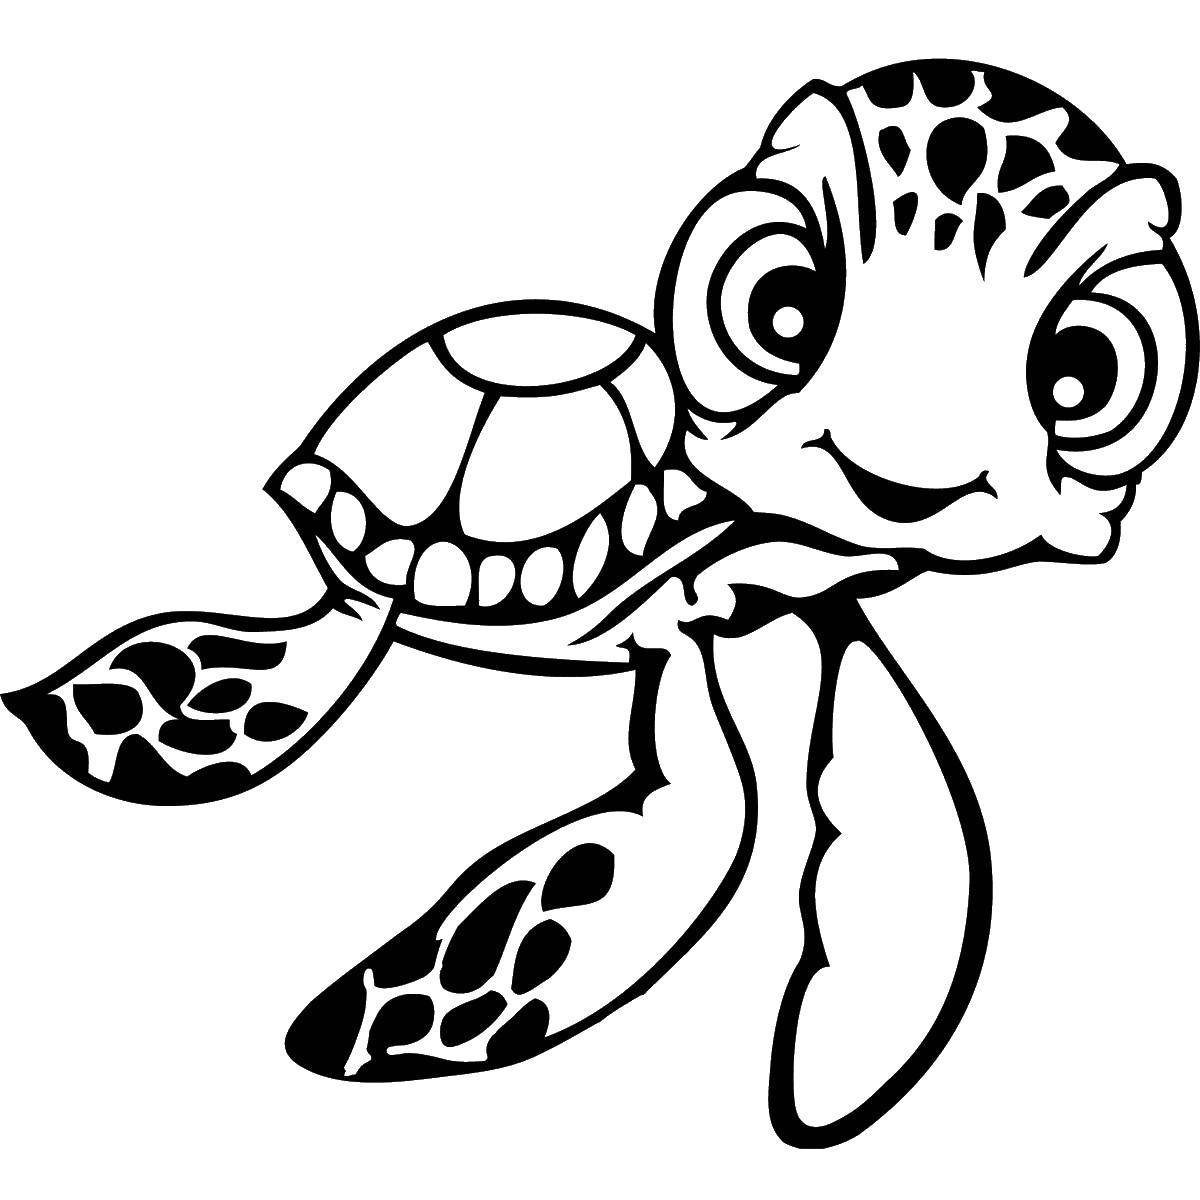 Название: Раскраска Милая черепашка. Категория: Животные. Теги: животные, черепахи, морские черепахи.